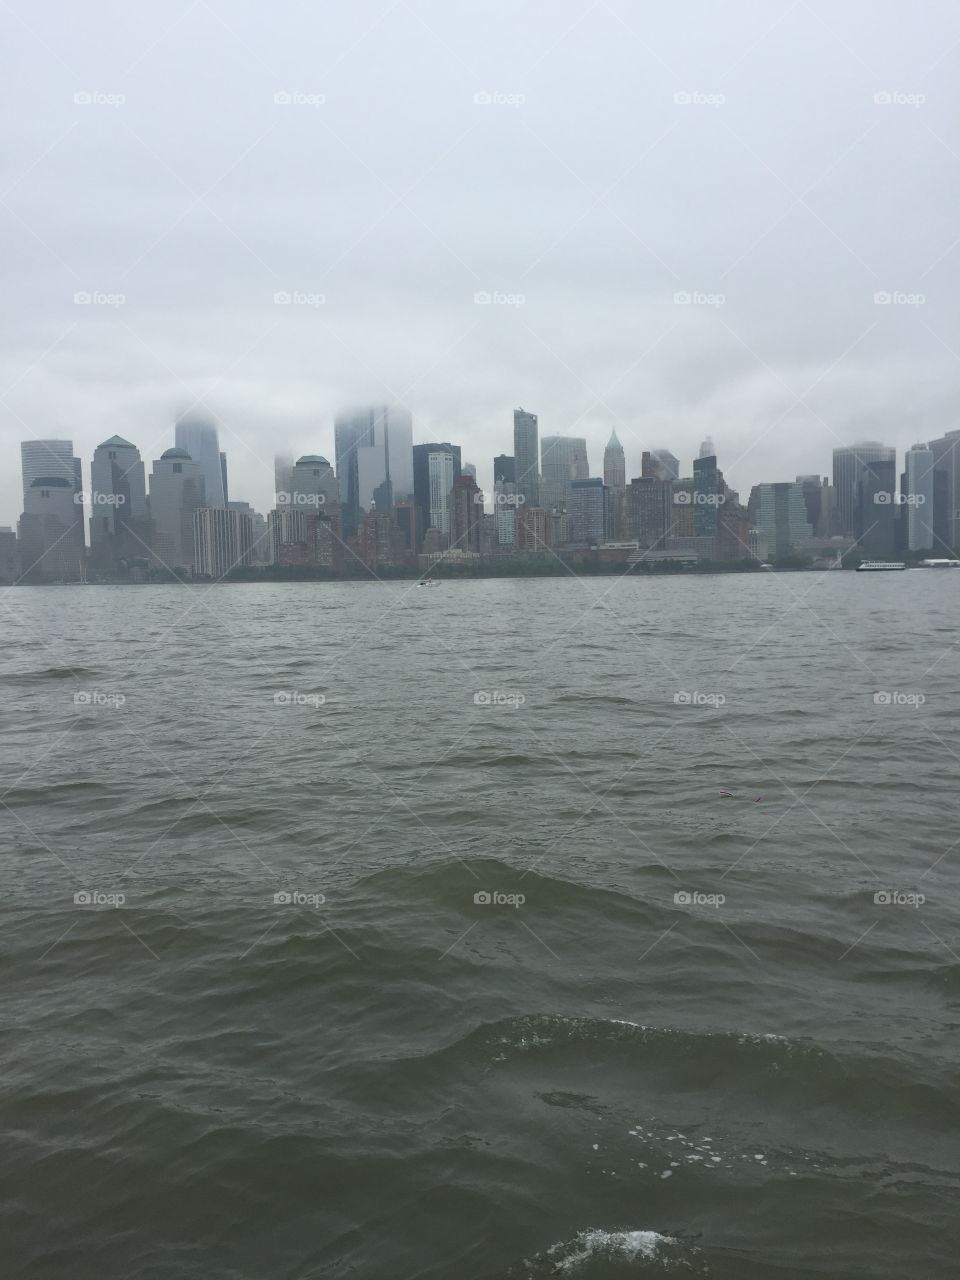 New York City on a foggy day